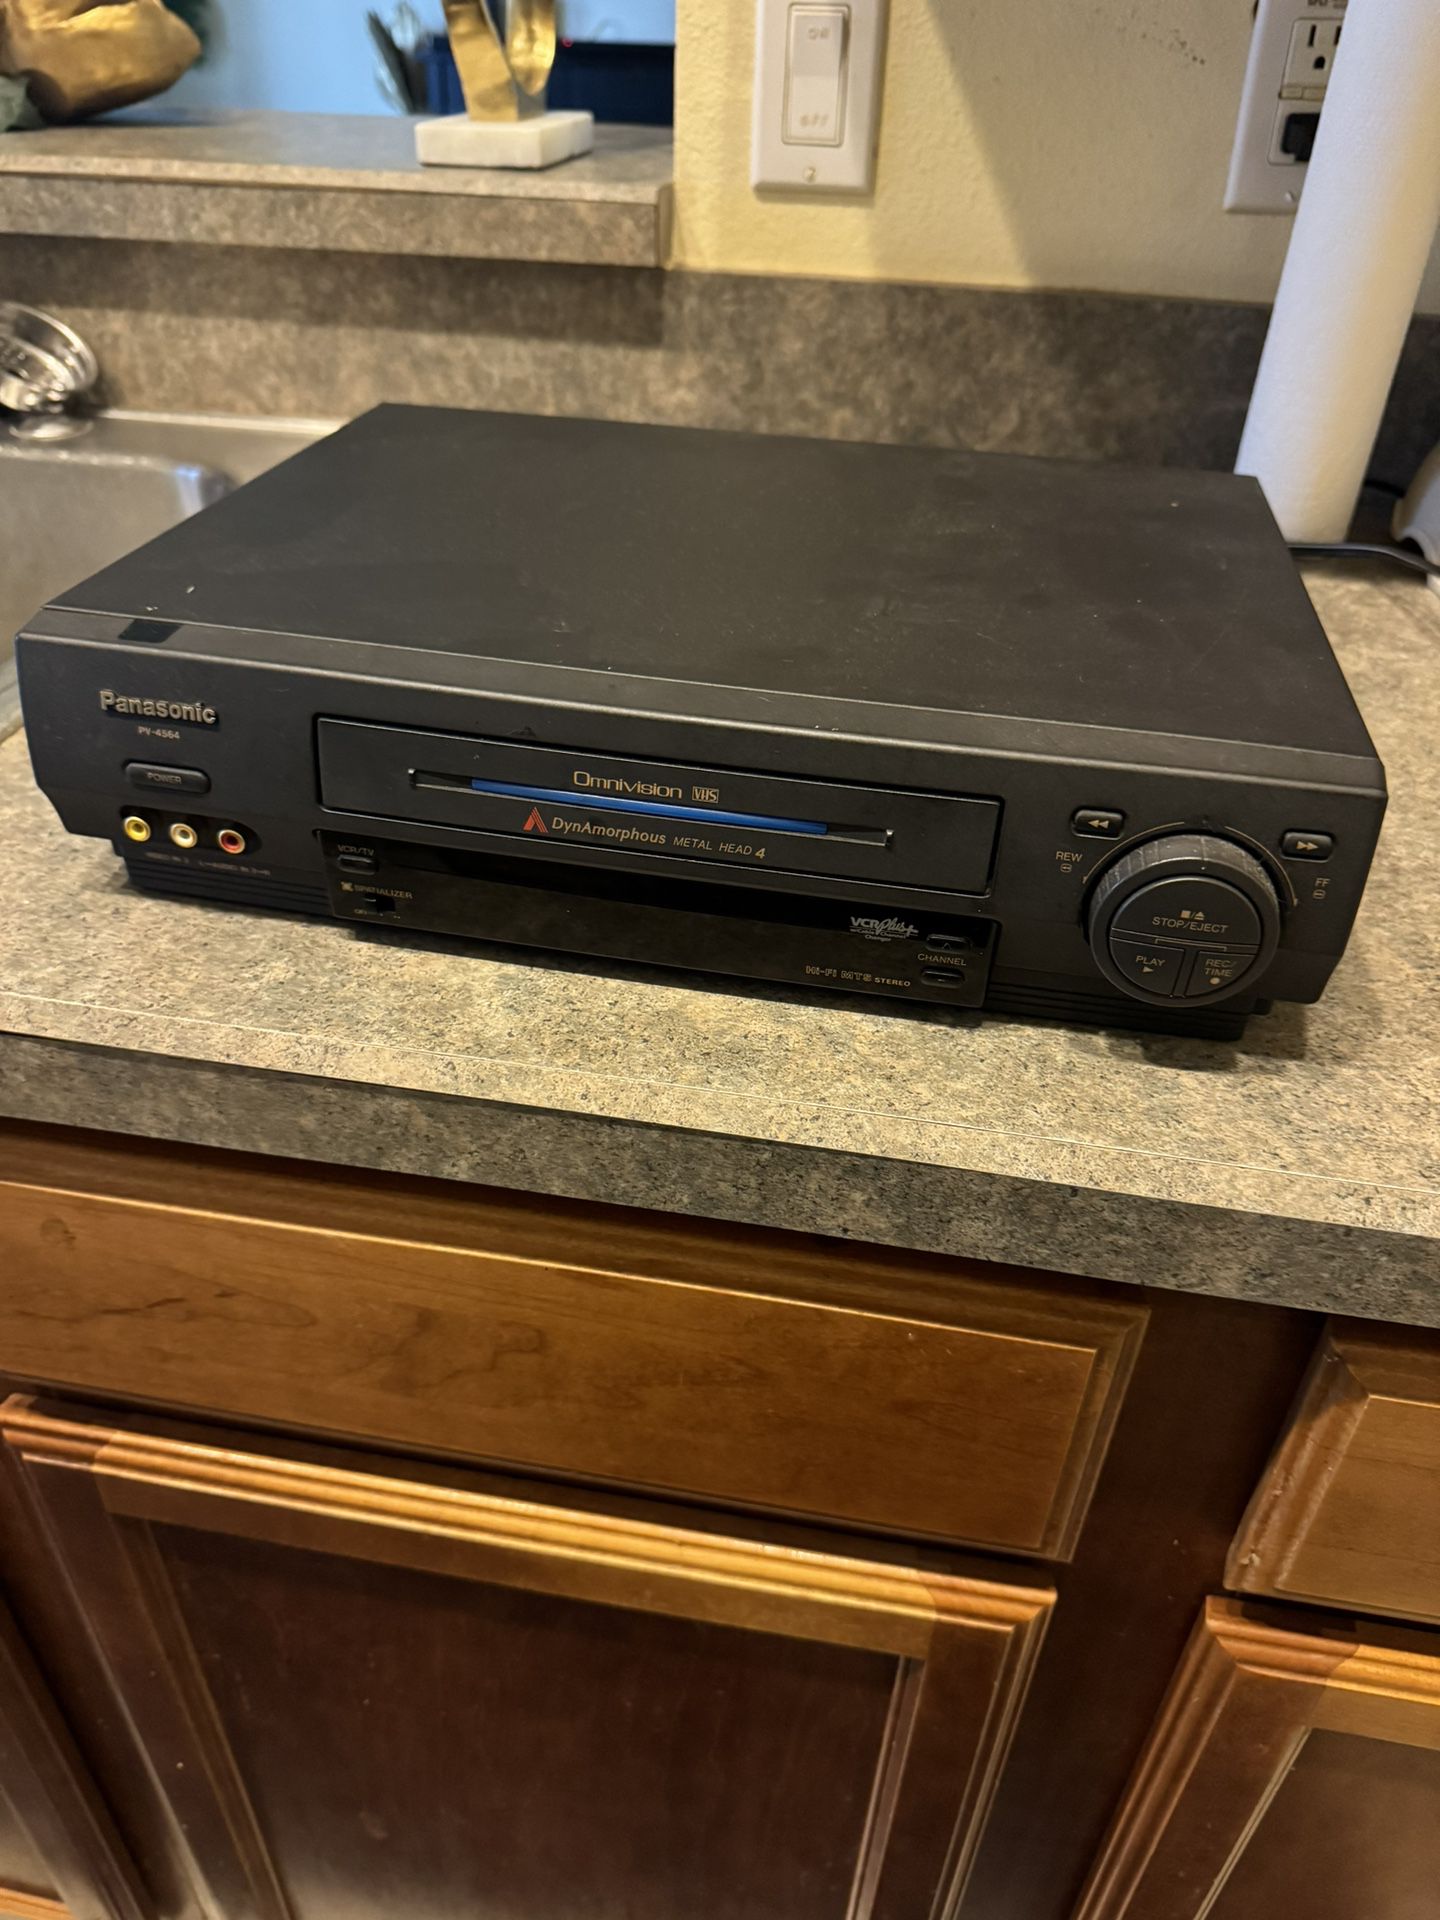 Panasonic PV-4564 Omnivision VHS 